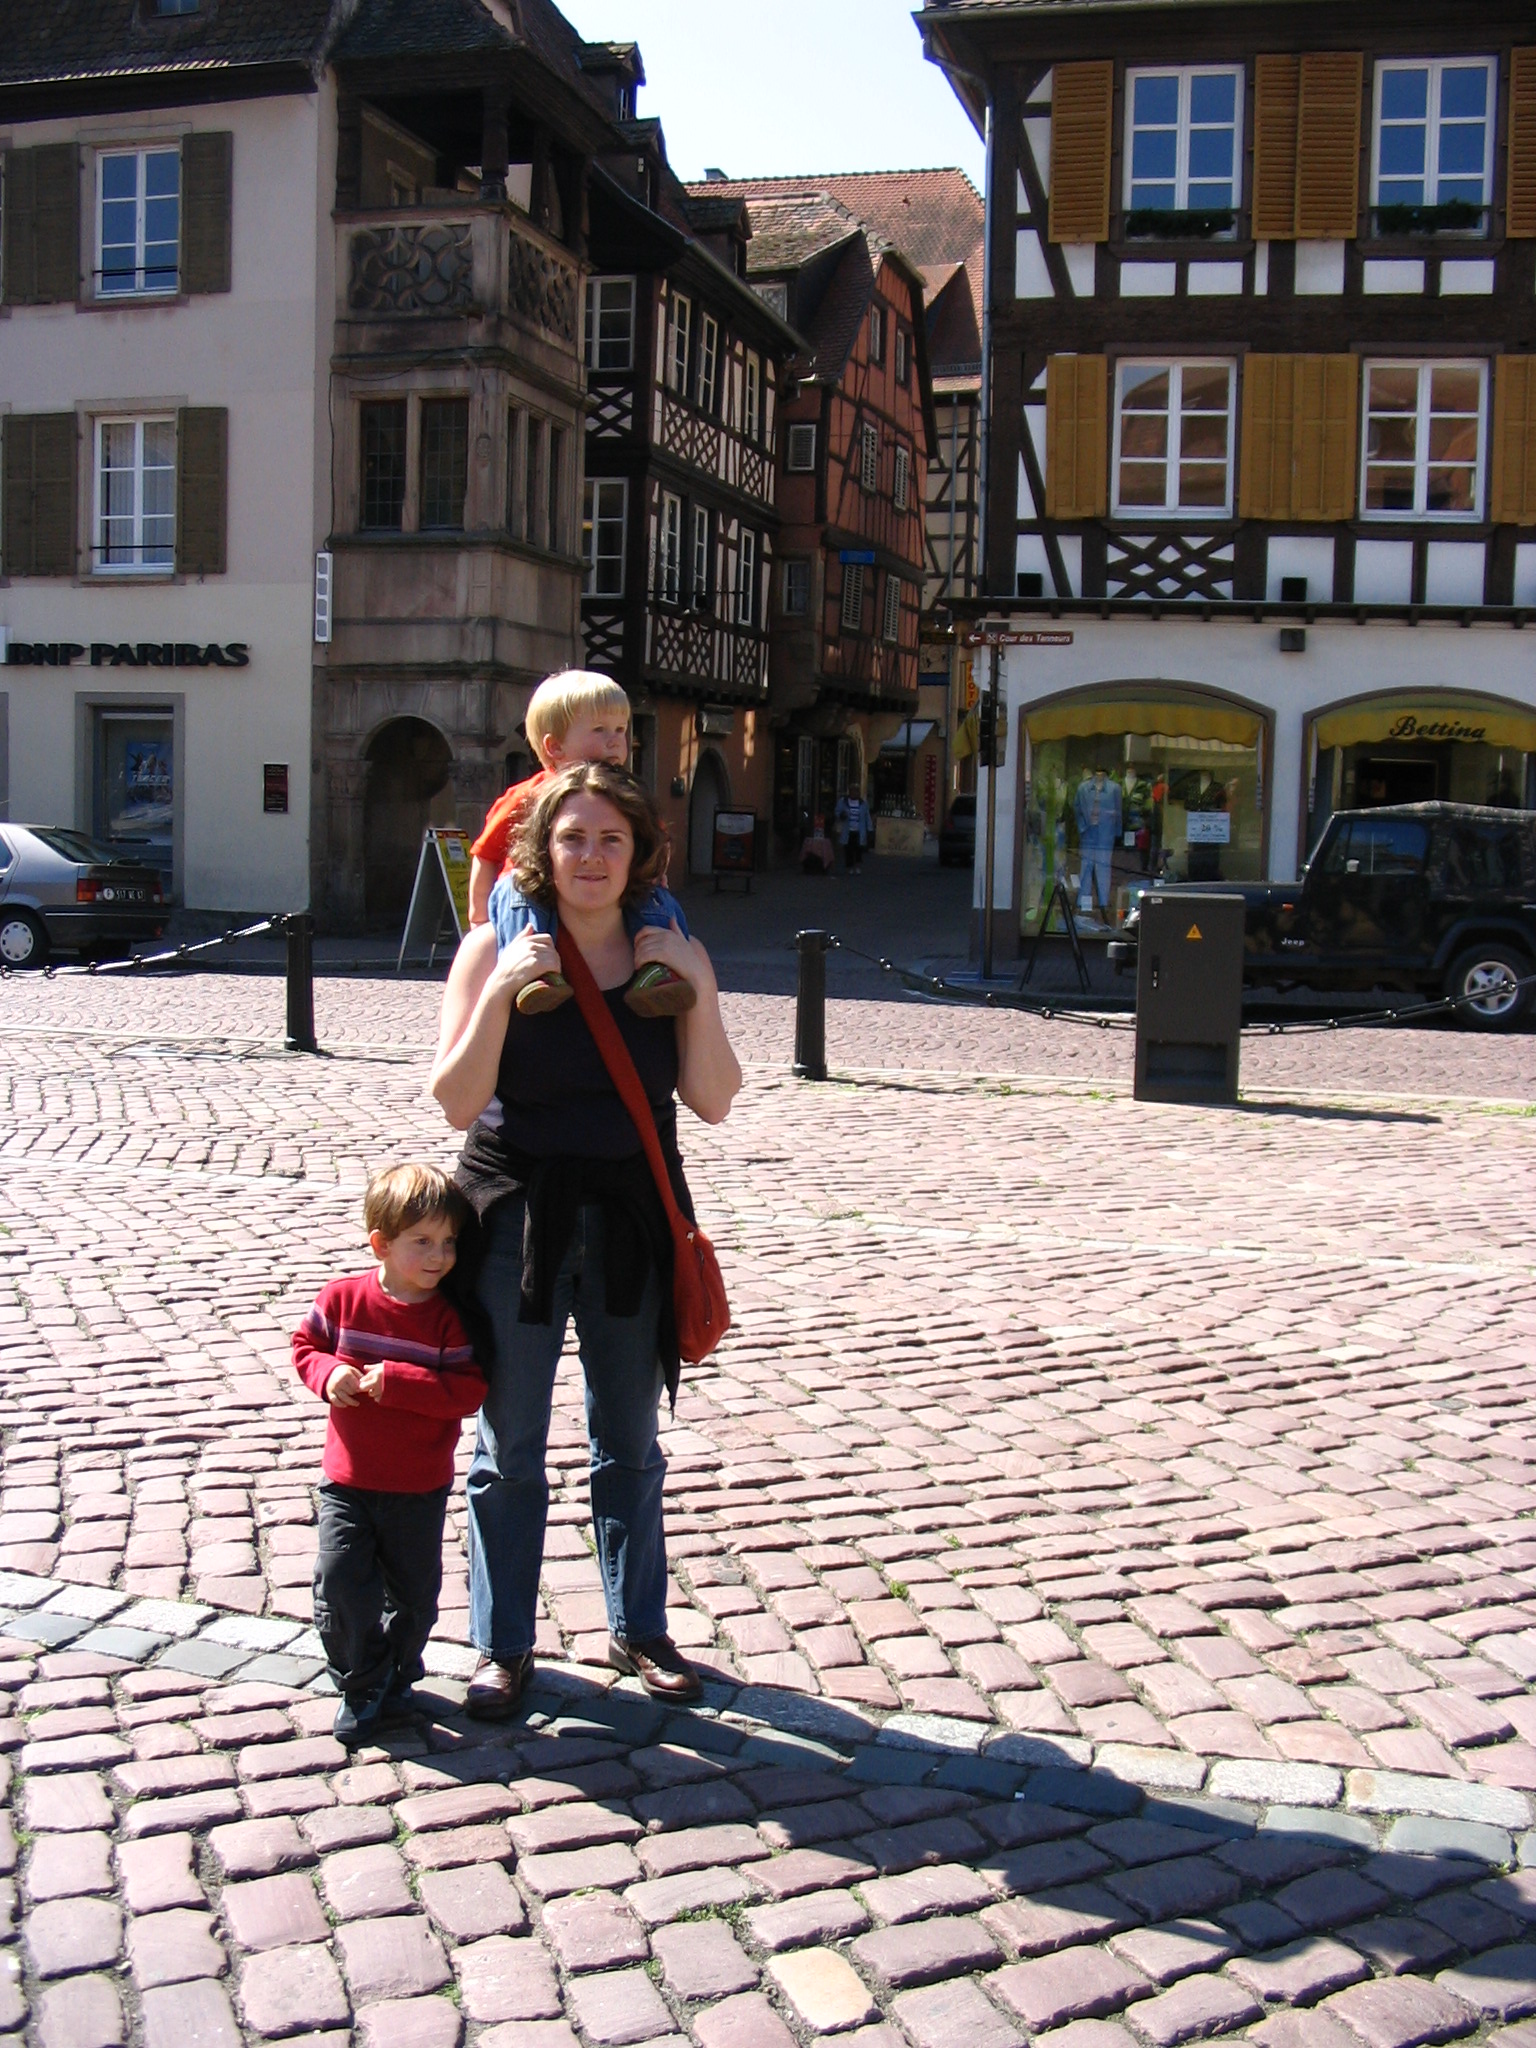 William, Allison and Julian (on shoulders) in Allsace - Obernai, France